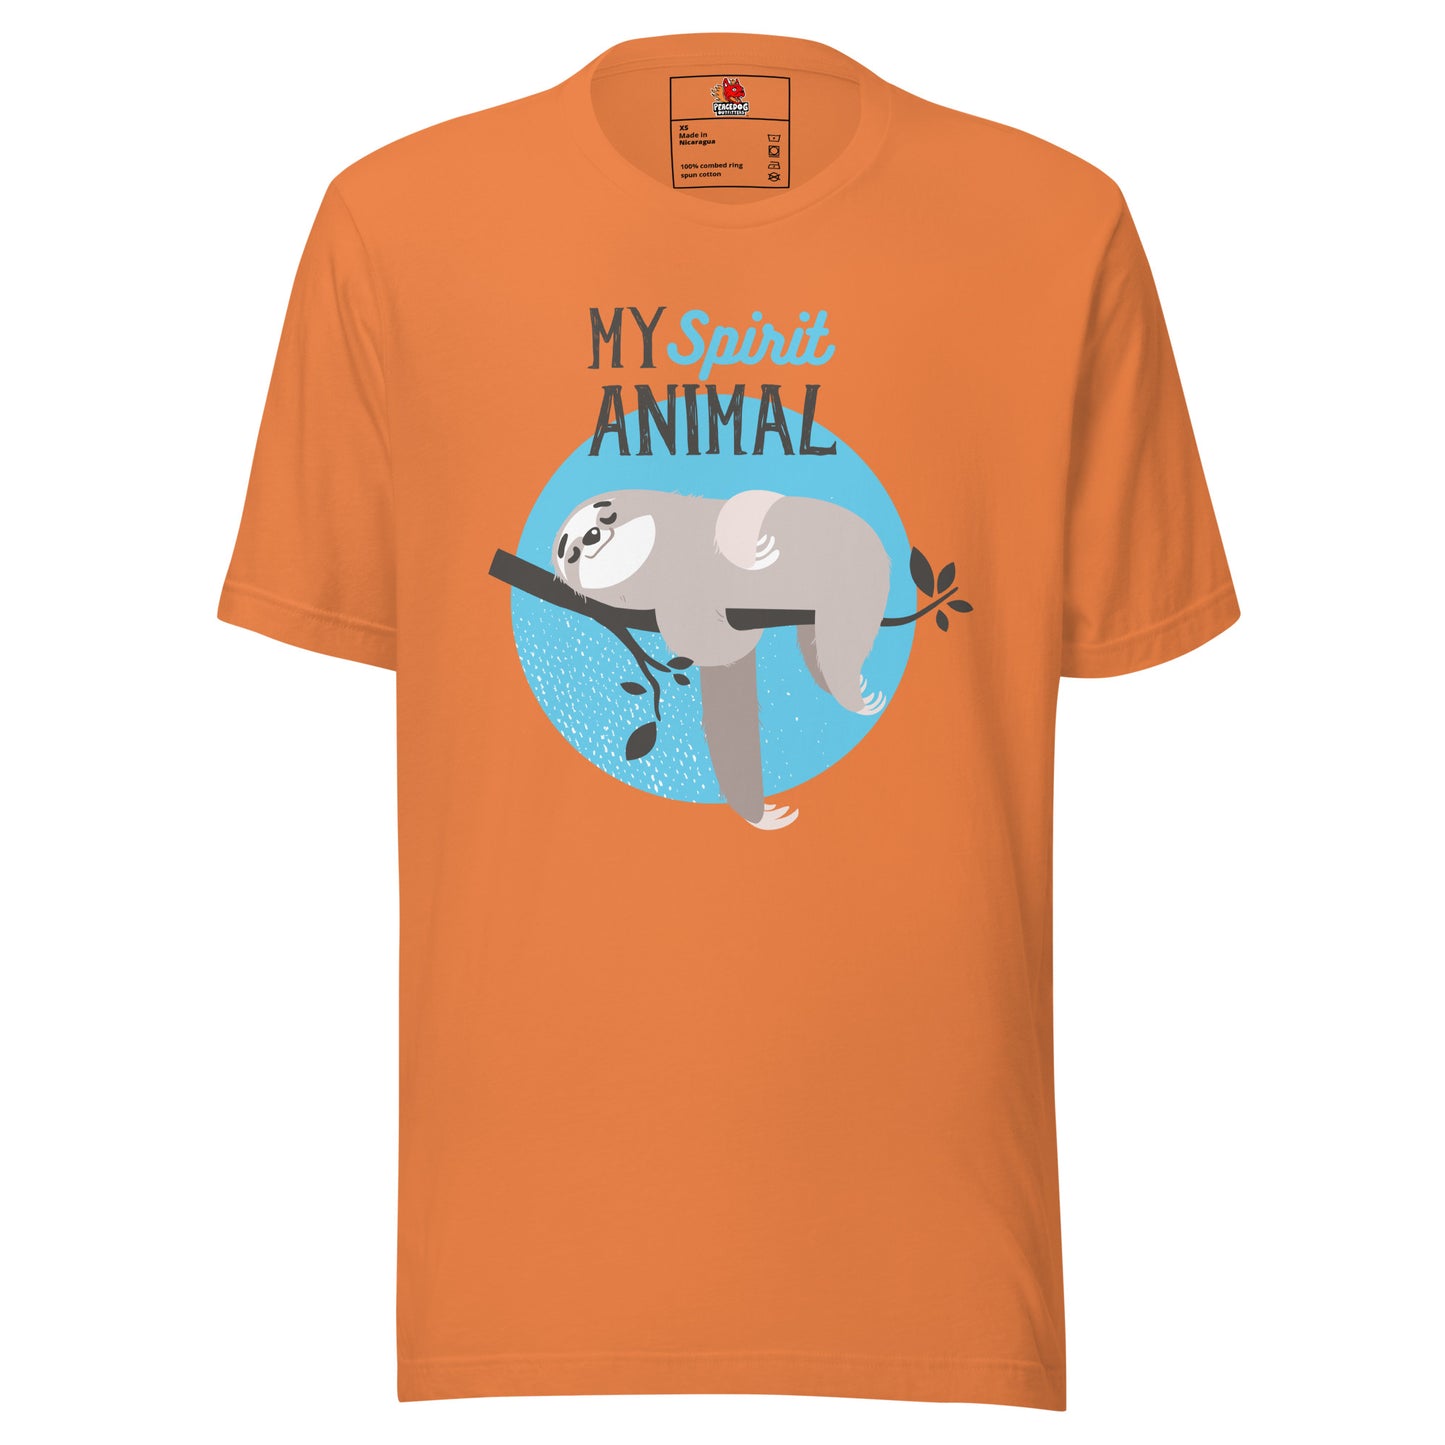 My Spirit Animal - Sloth T-Shirt